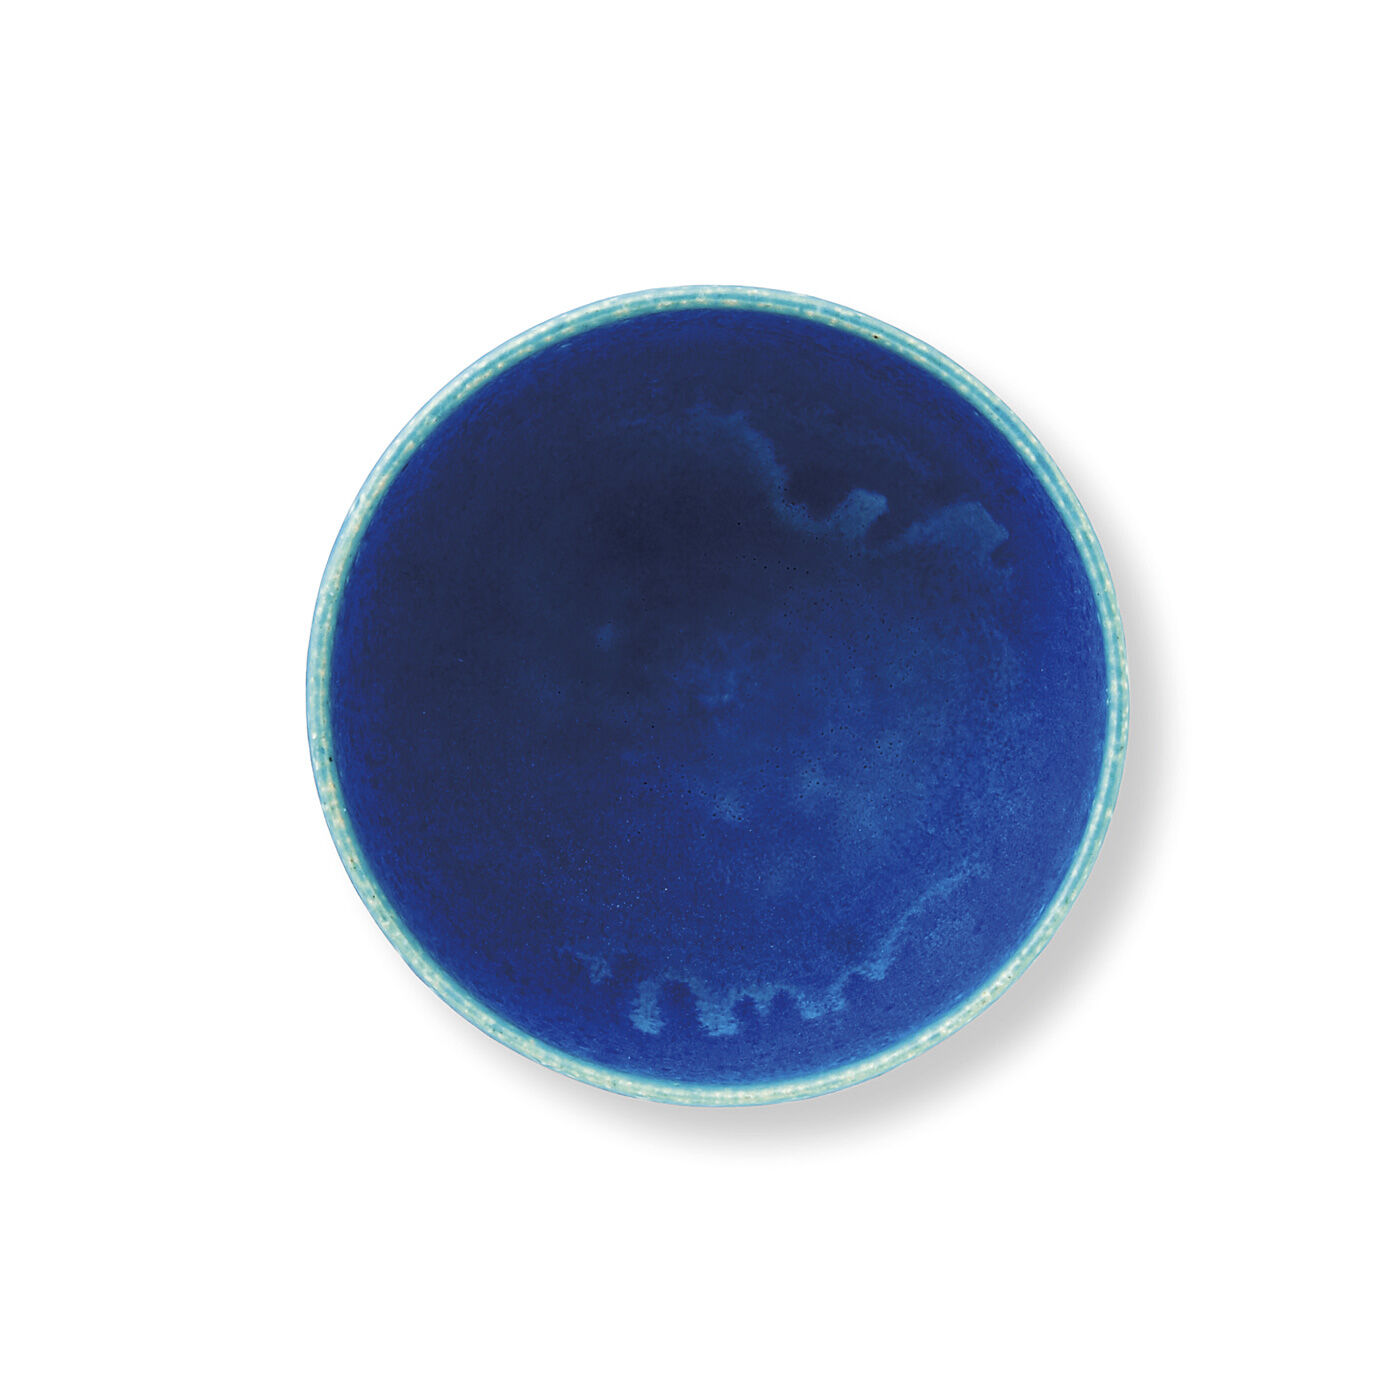 USEDo|信楽焼の味わい深い青色カップの会